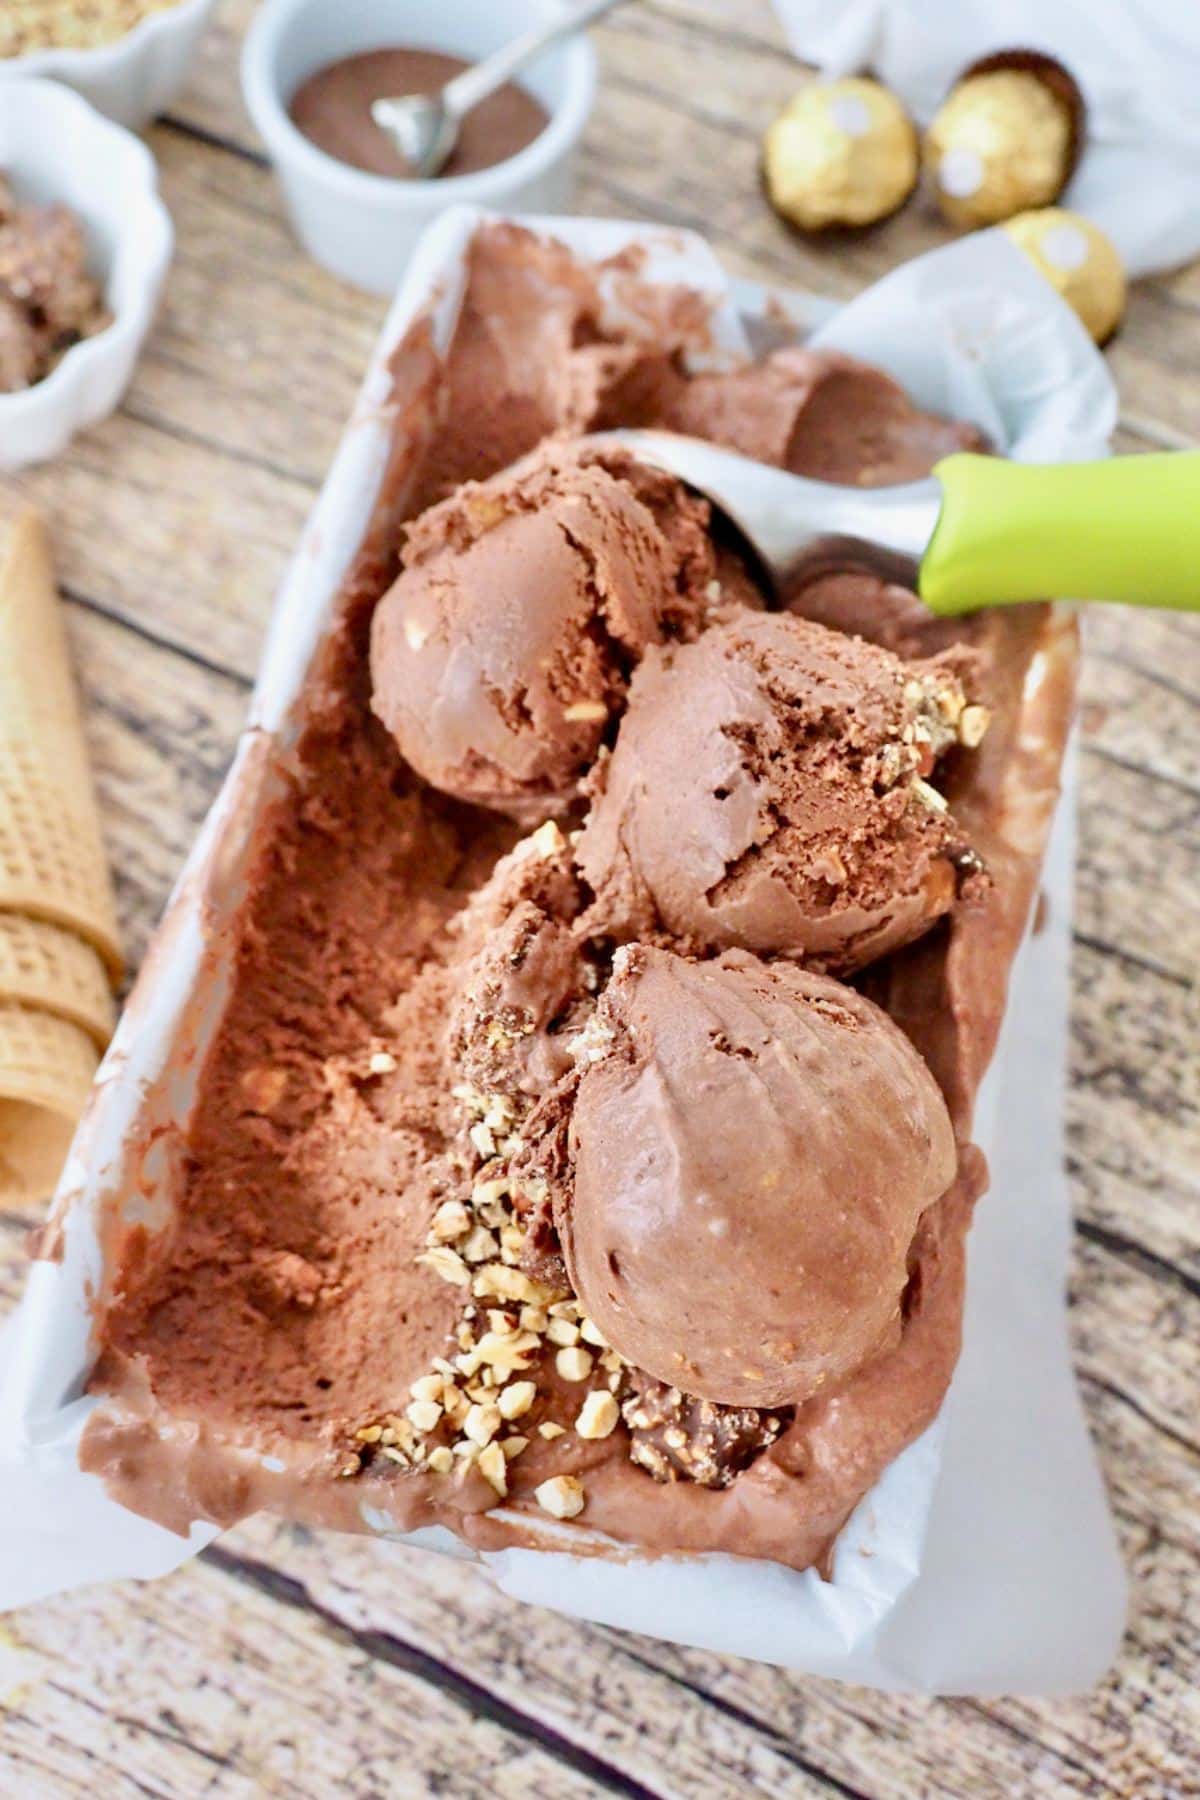 Ferrero ice cream in container with three scoops, scooped.